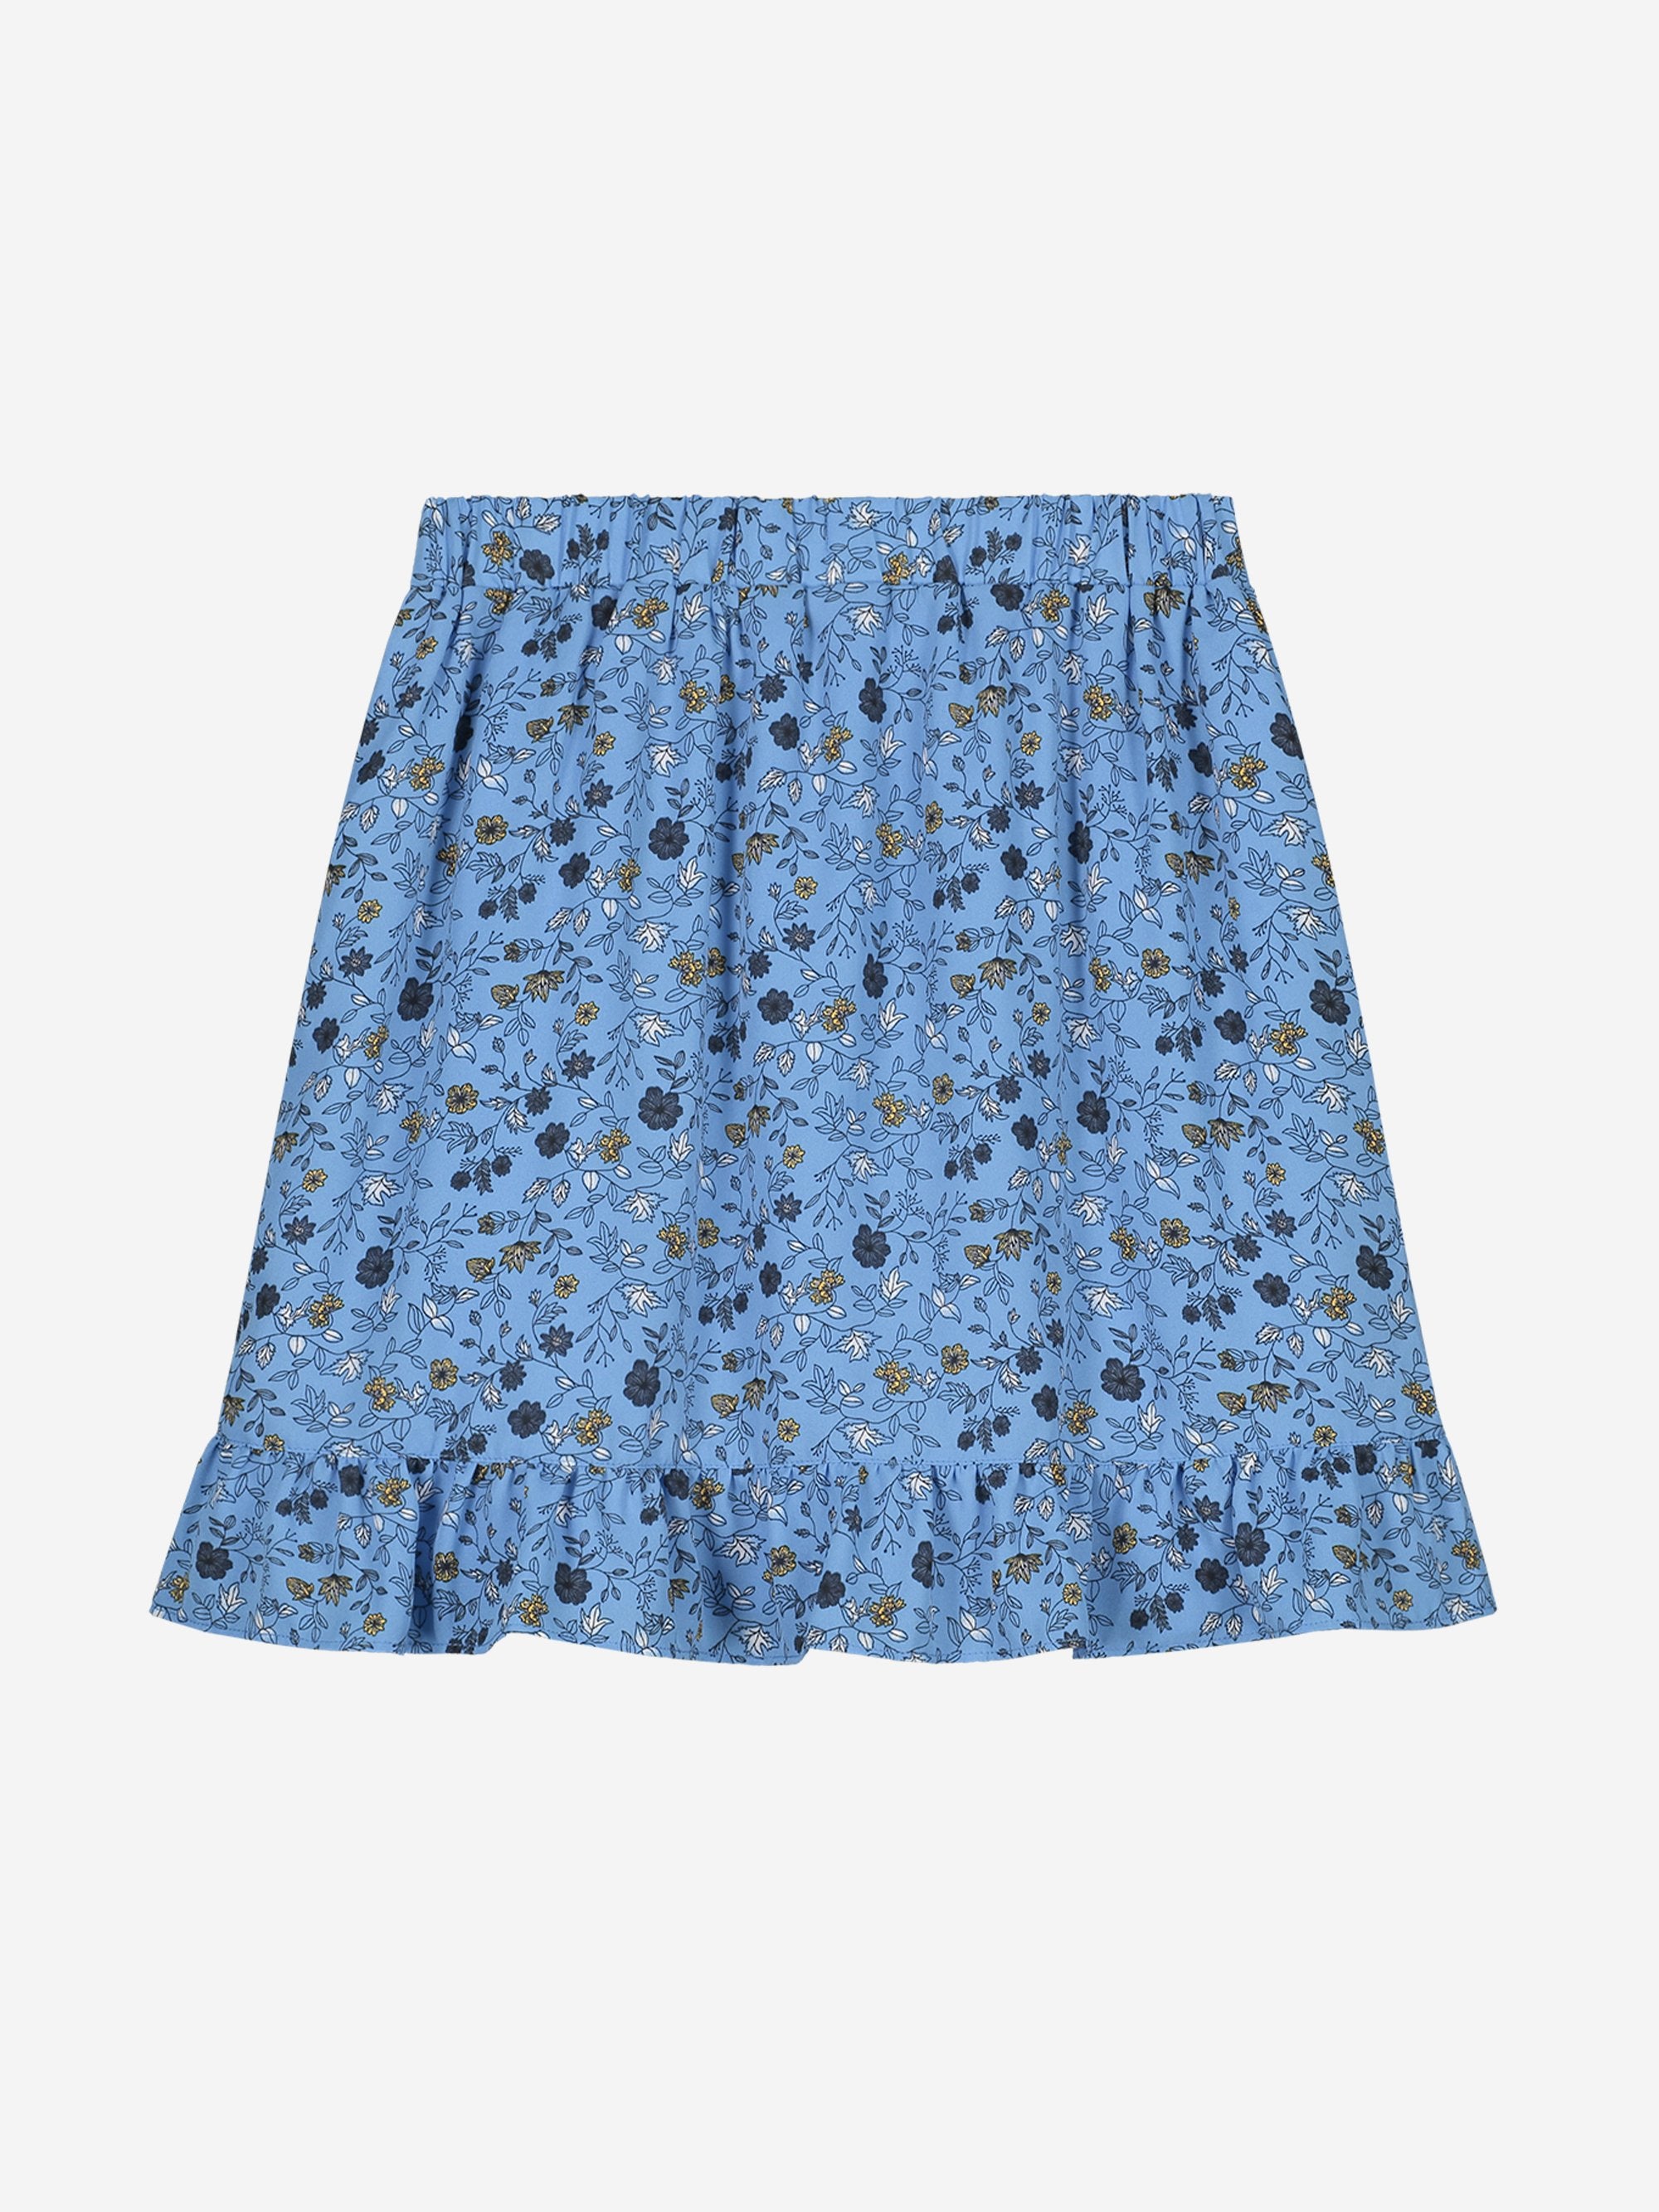 Meisjes Bracha Skirt van Nik & Nik in de kleur Fresh Blue in maat 176.